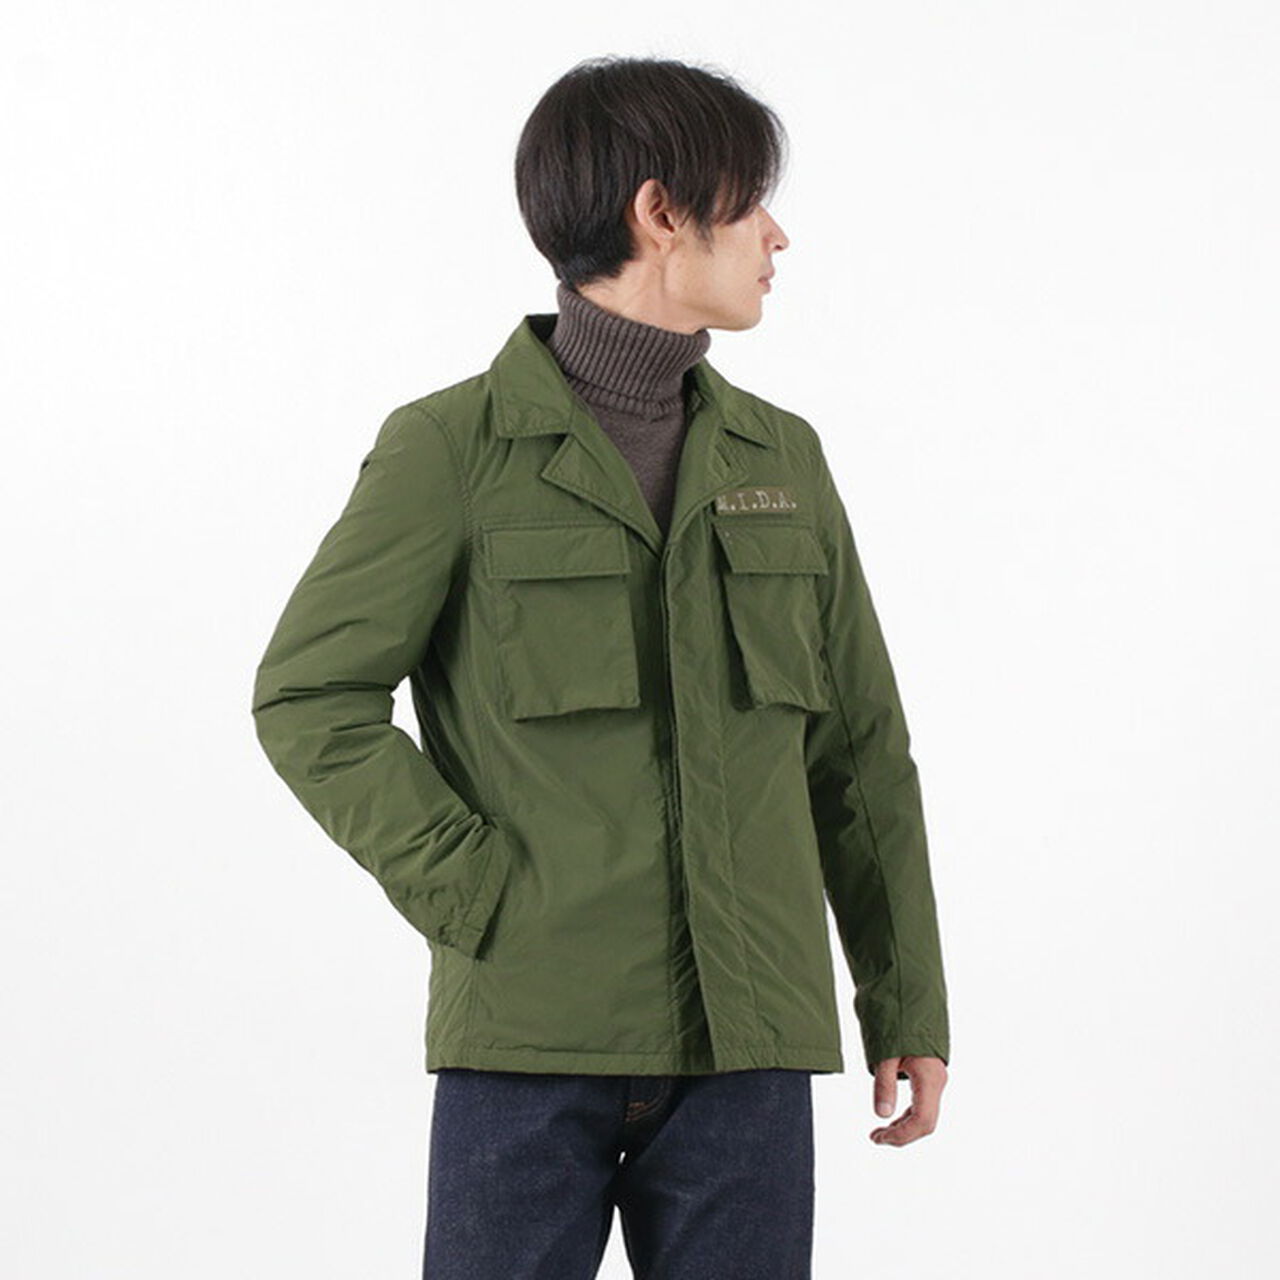 Lennon Down Military Jacket,Olive, large image number 0